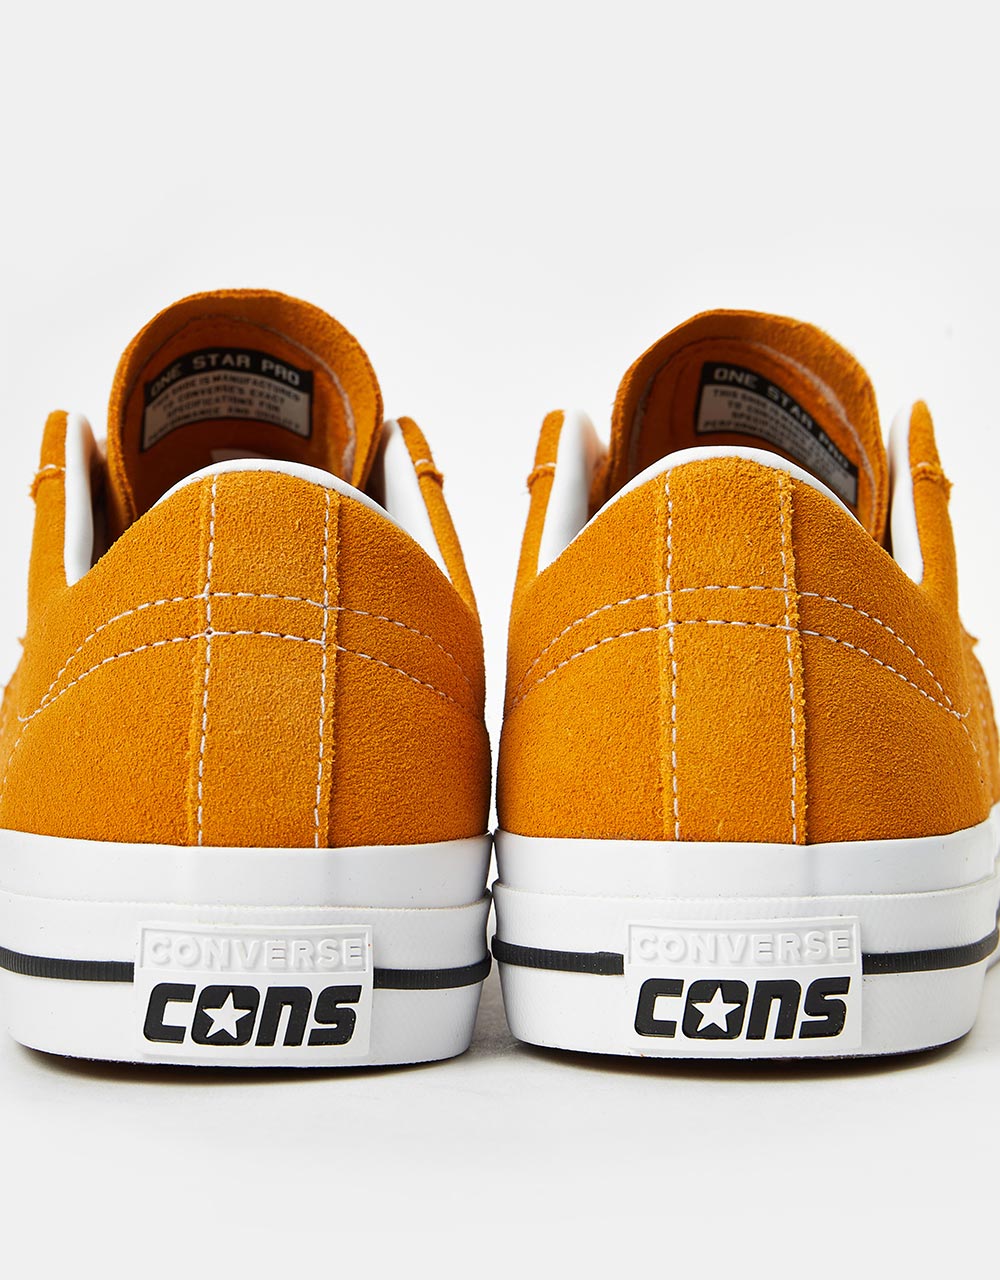 Converse One Star Pro Skate Shoes - Golden Sundial/White/Black